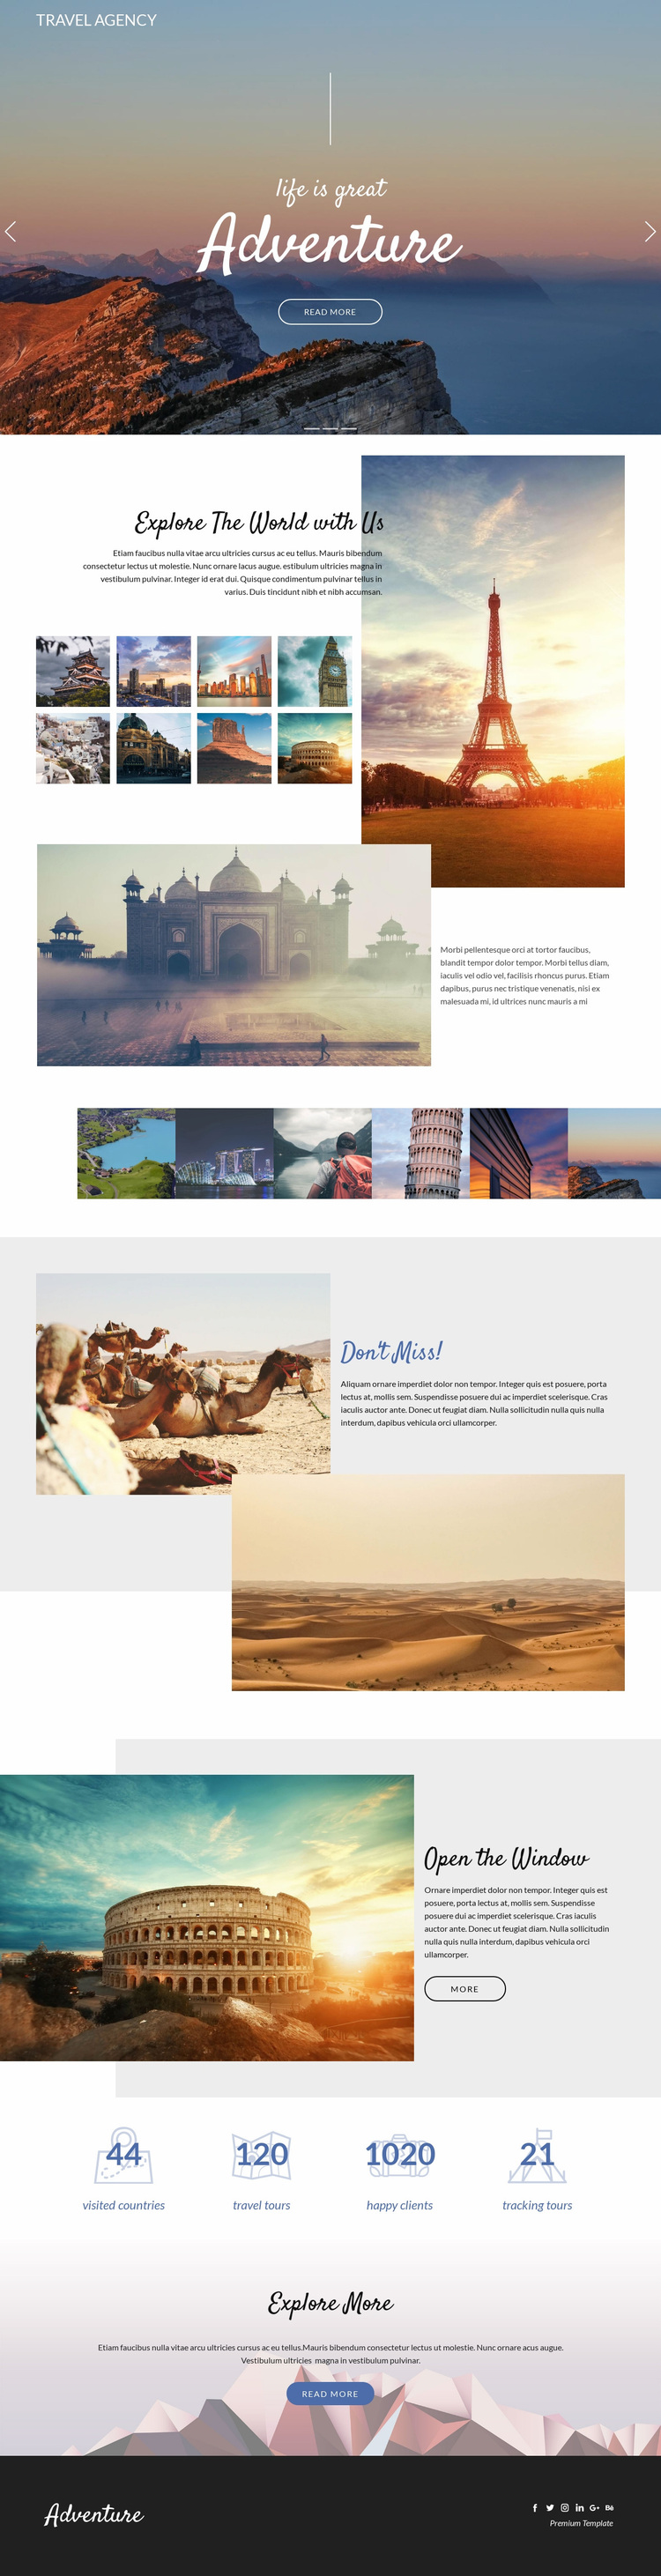 Adventure and travel Website Design